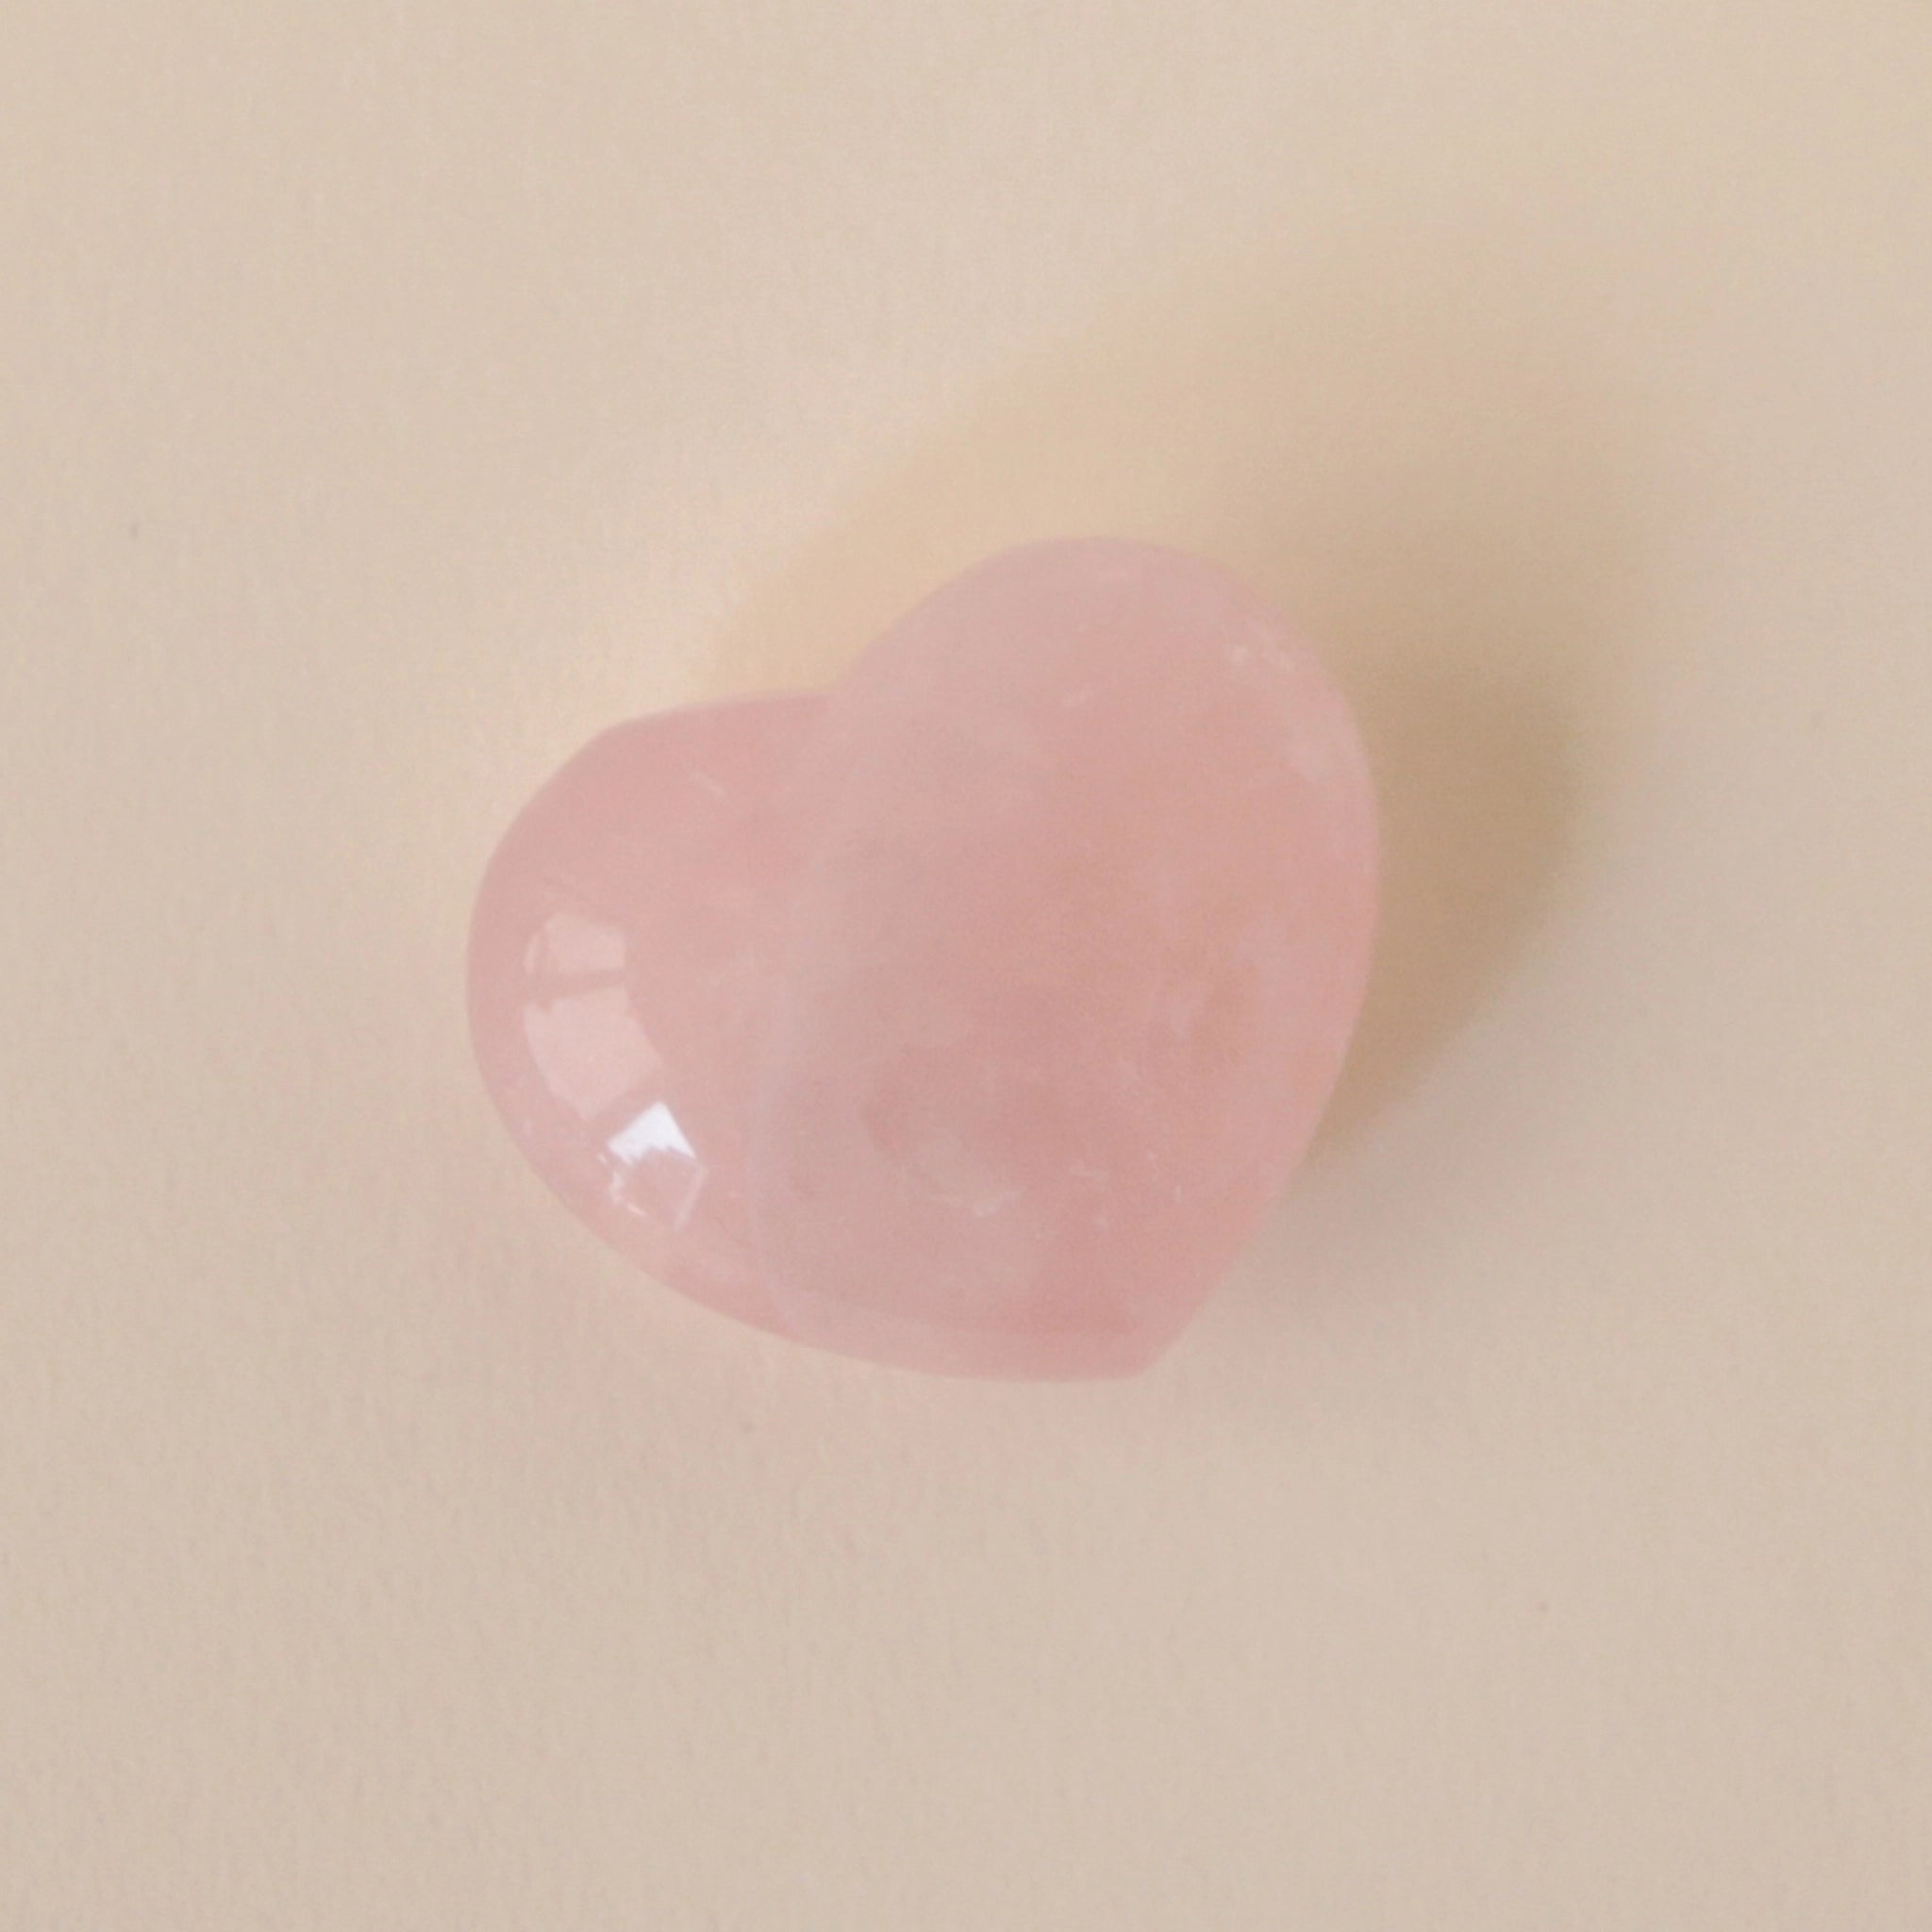 A heart shaped rose quartz crystal.